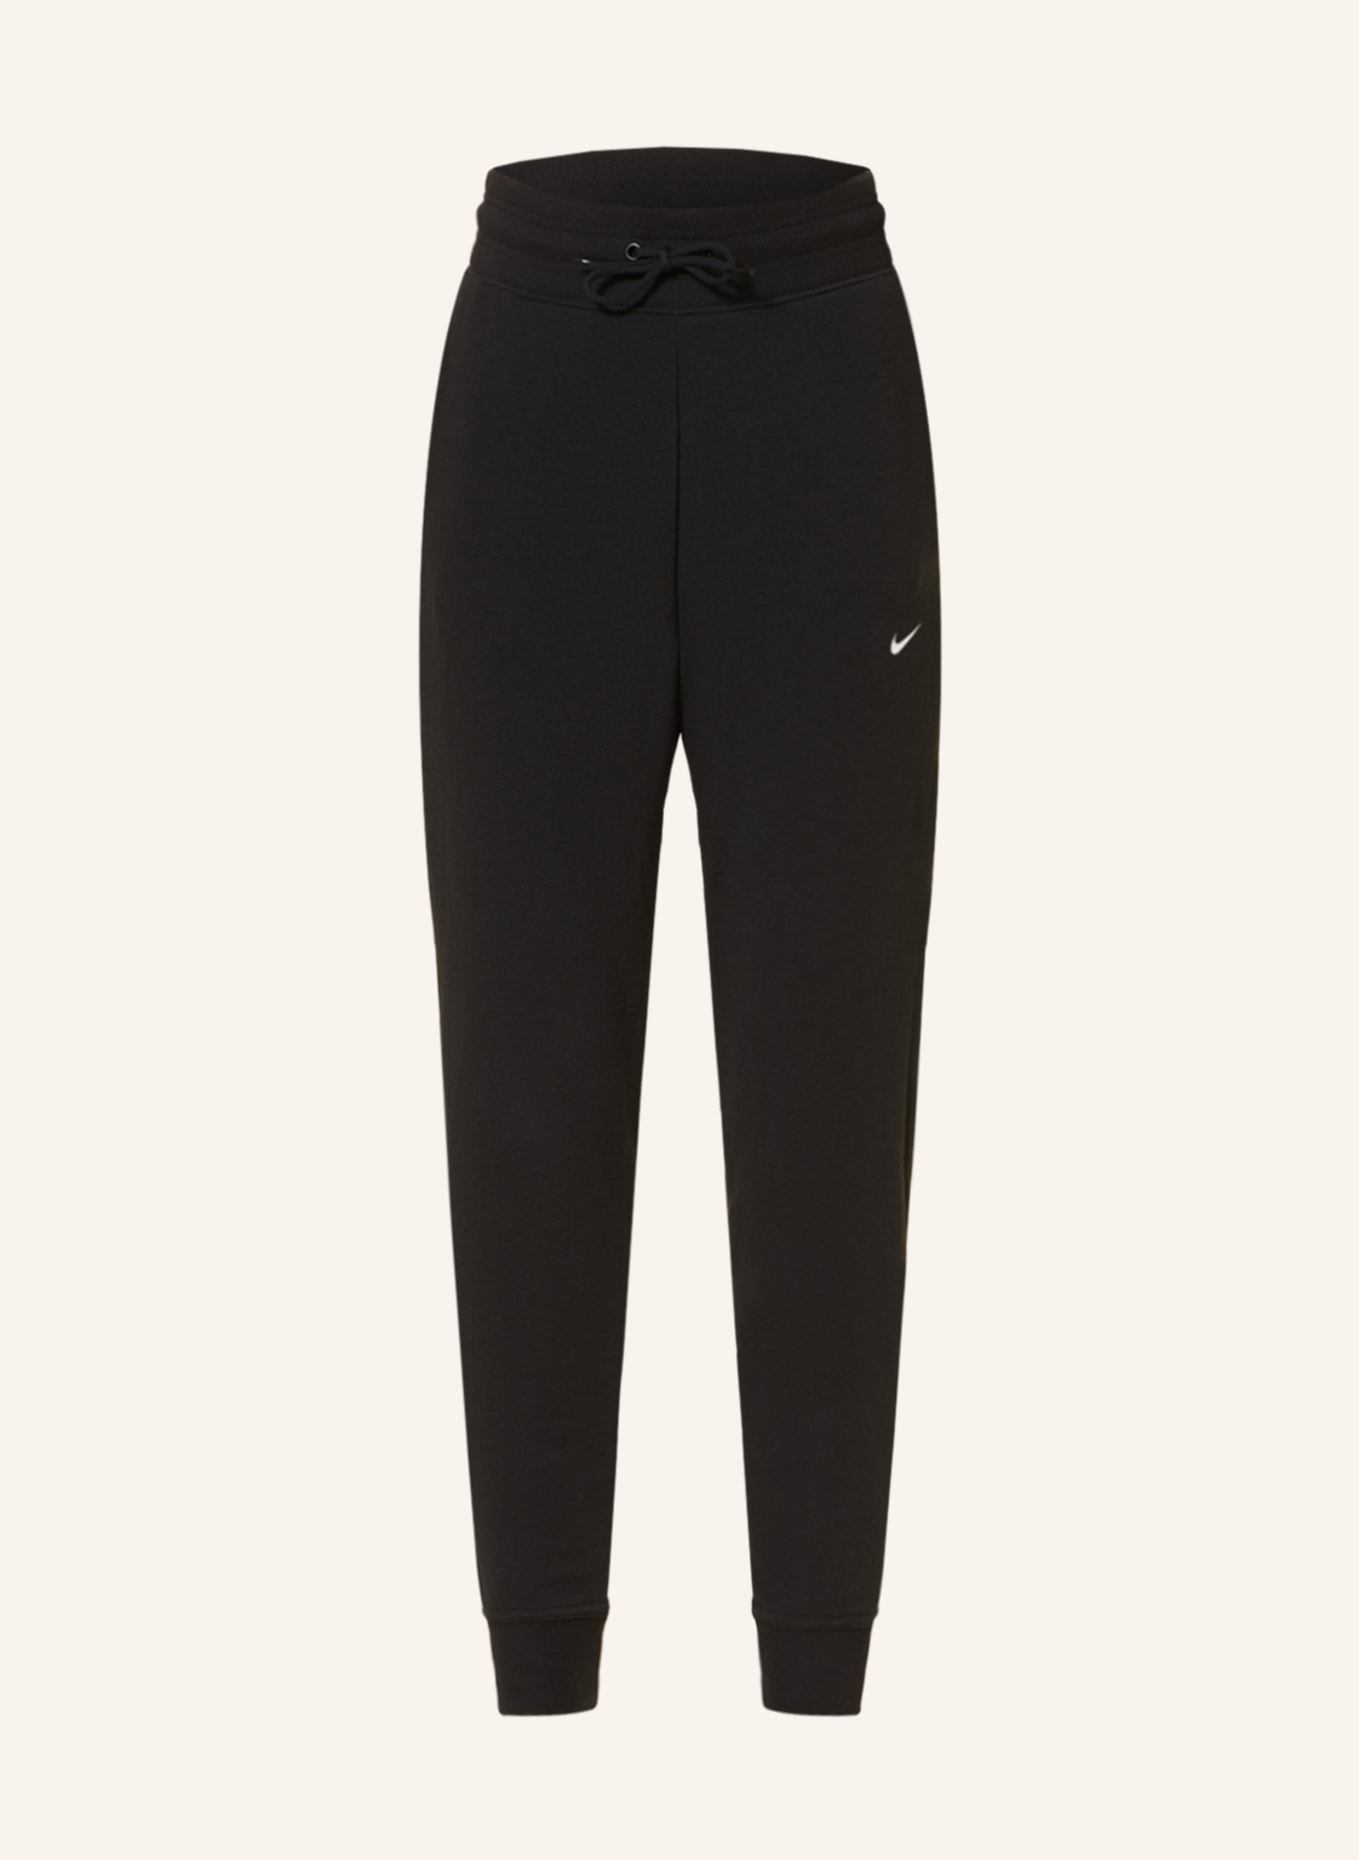 Nike Sweatpants DRI-FIT ON in black